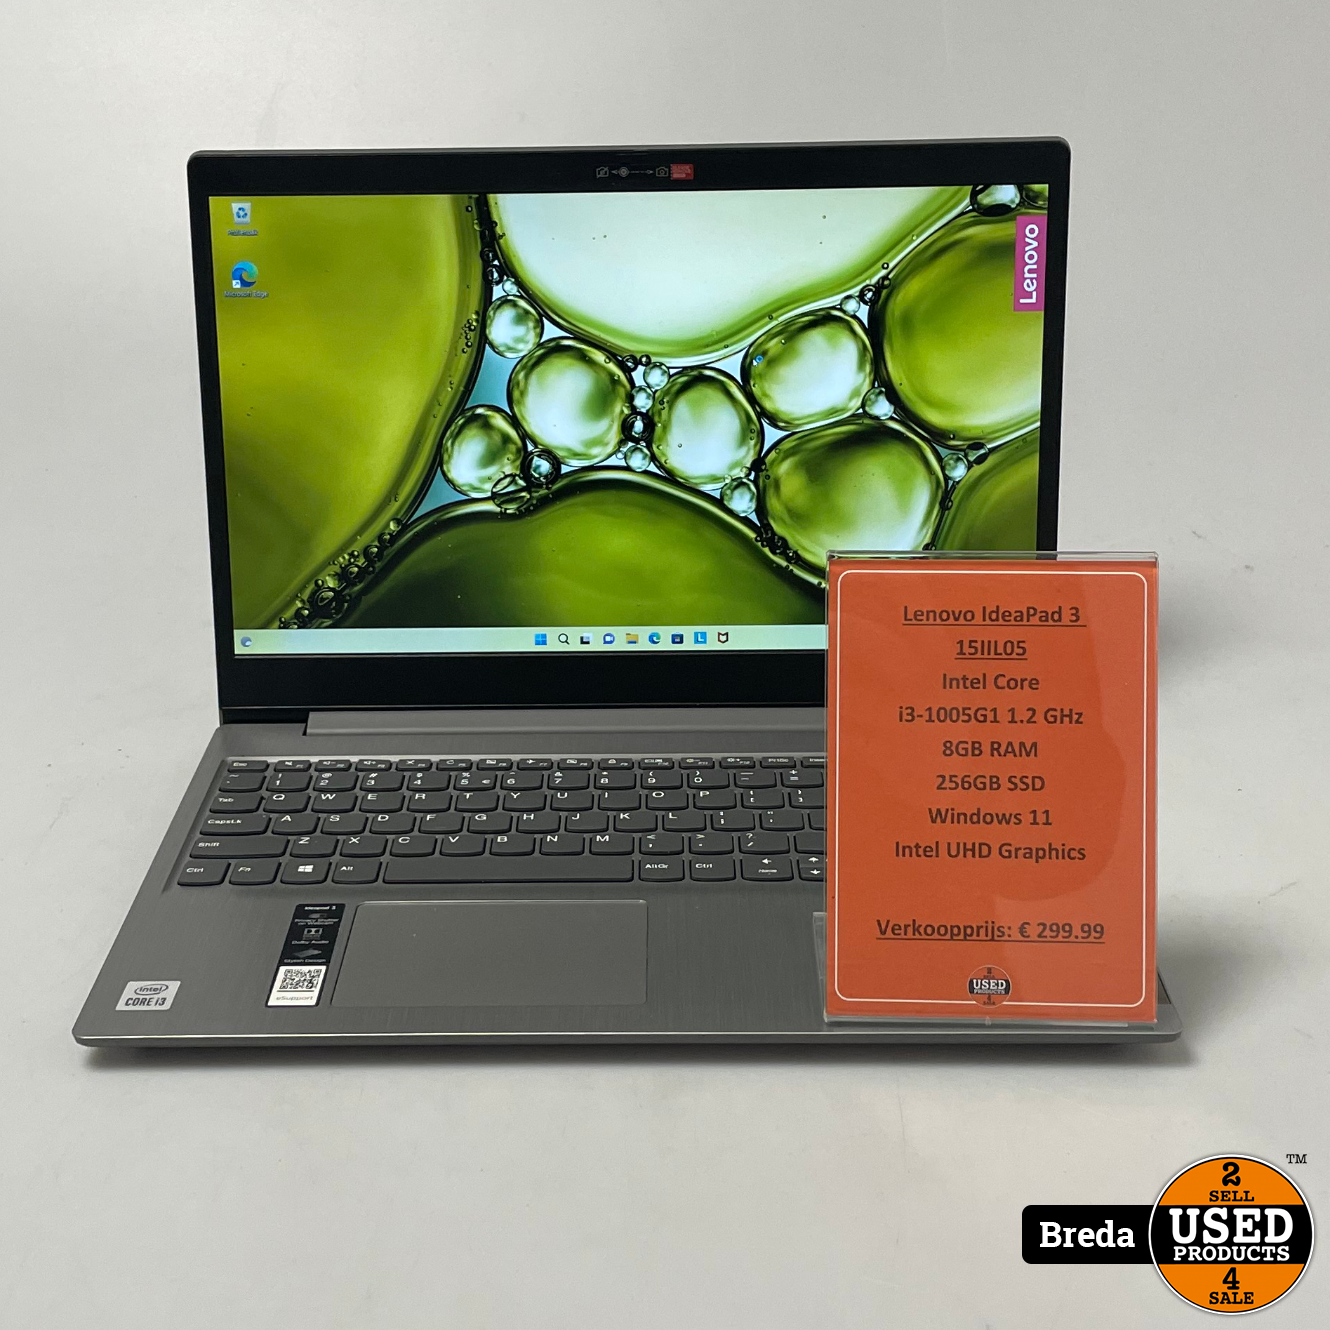 tetraëder Clancy Beroep Lenovo IdeaPad 3 15IIL05 Laptop | Intel Core i3-1005G1 1.2 GHz 8GB RAM  256GB SSD Windows 11 Intel UHD Graphics | Met garantie - Used Products Breda